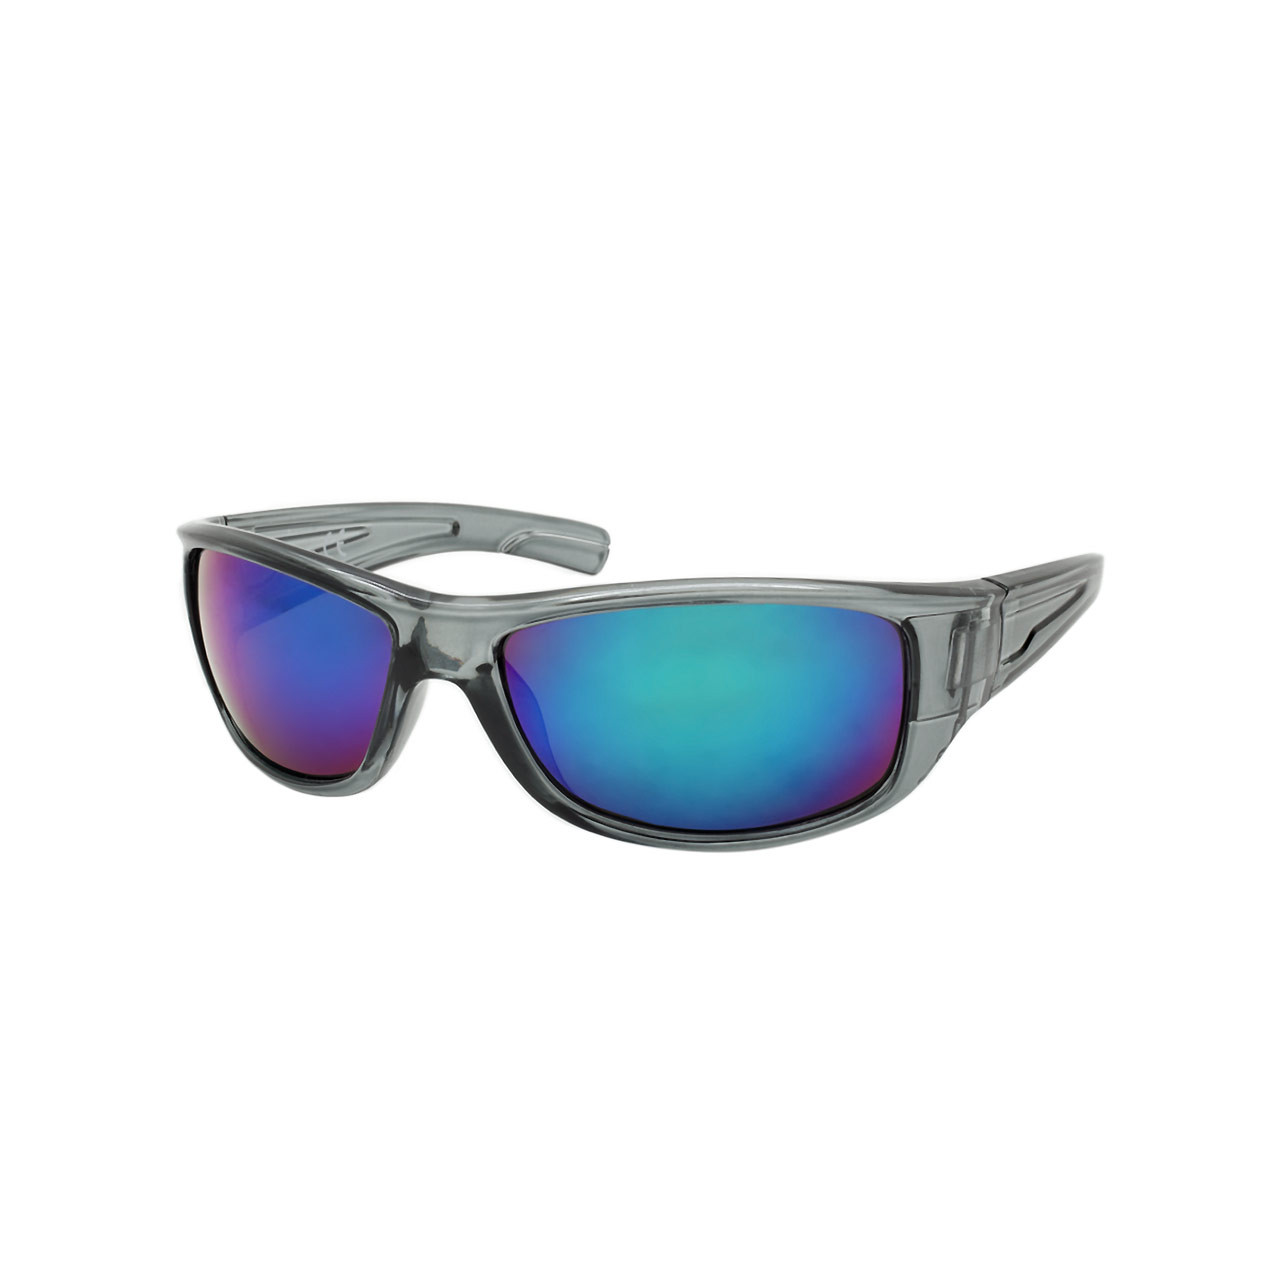 SP08RV | SPORT ASSTD. Inc. Wholesale 12 & Glasses, Displays Reading Eyes, PCS Sunglasses, Shark - 